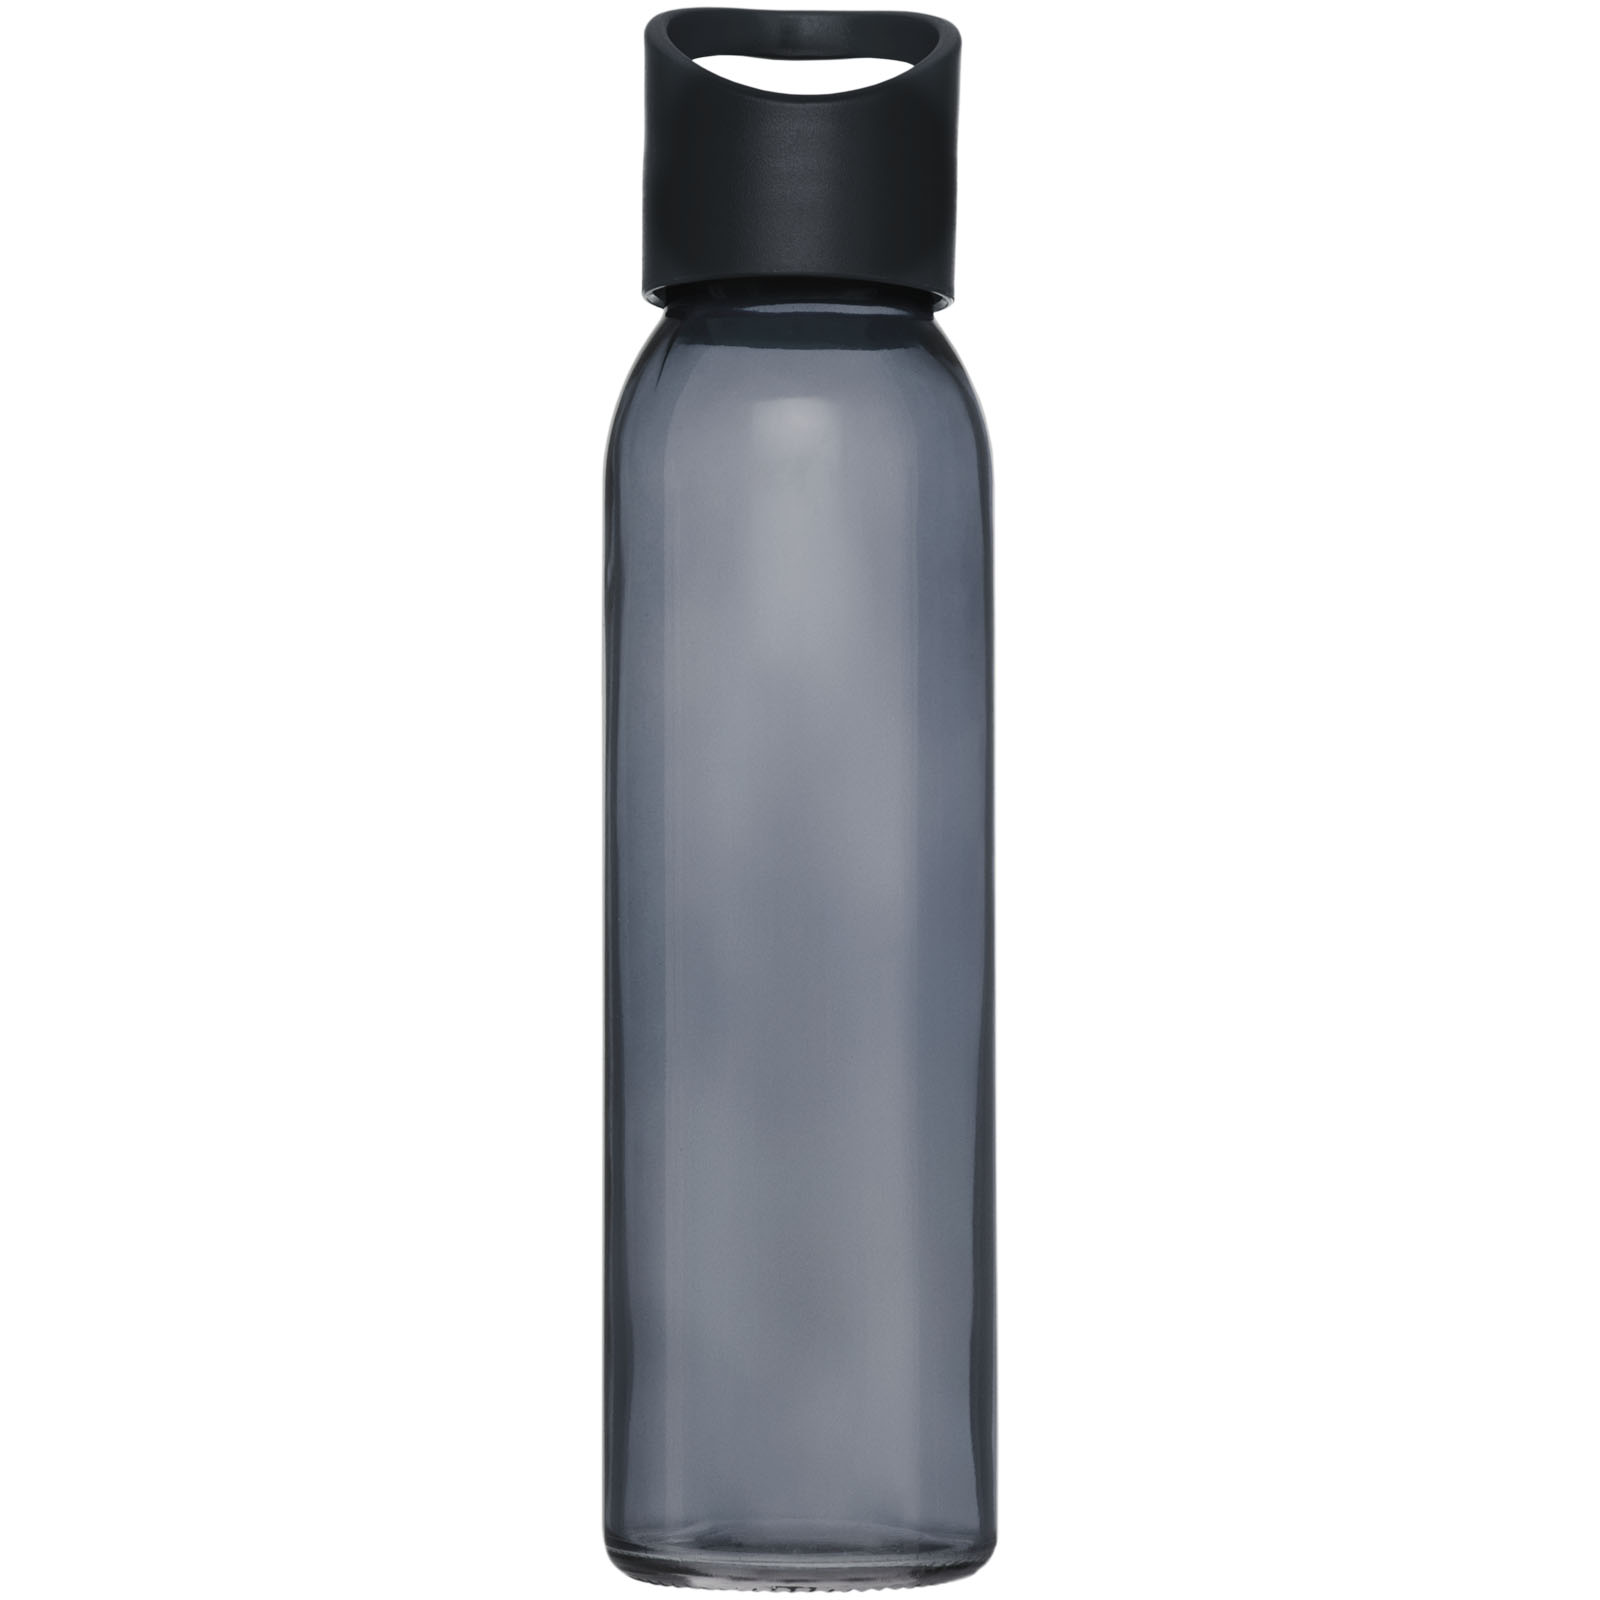 Advertising Water bottles - Sky 500 ml glass water bottle - 2